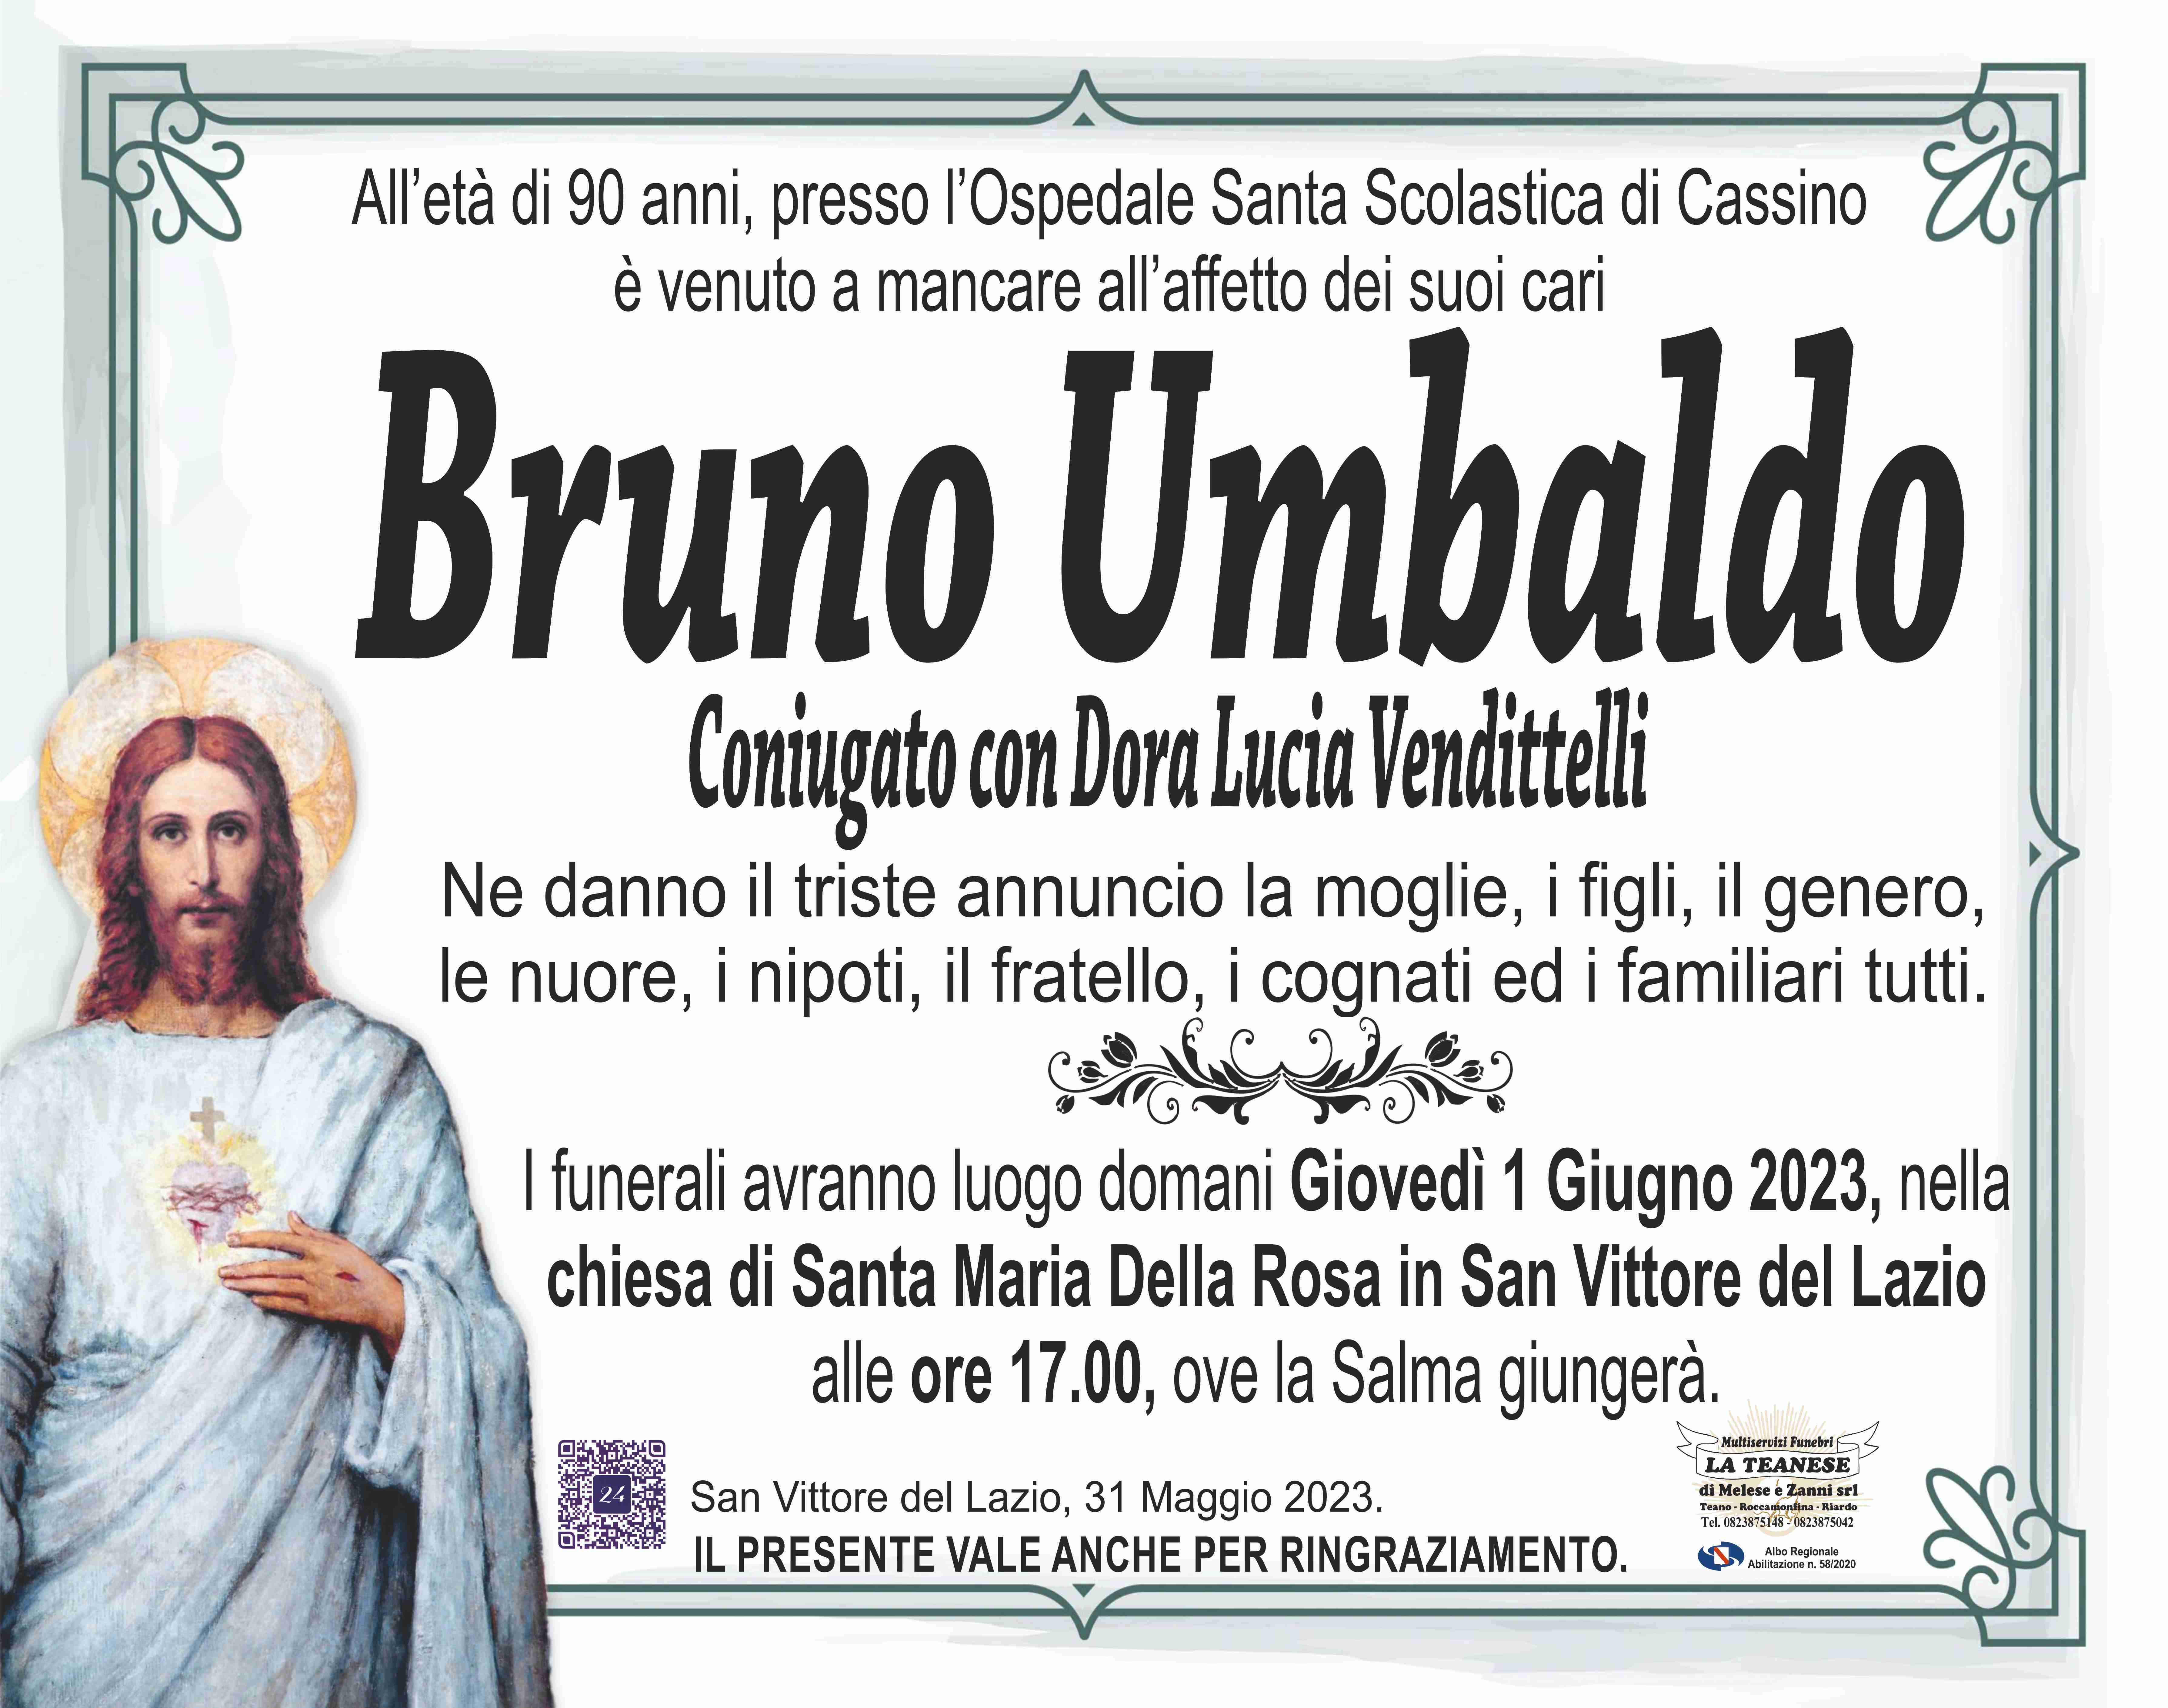 Bruno Umbaldo